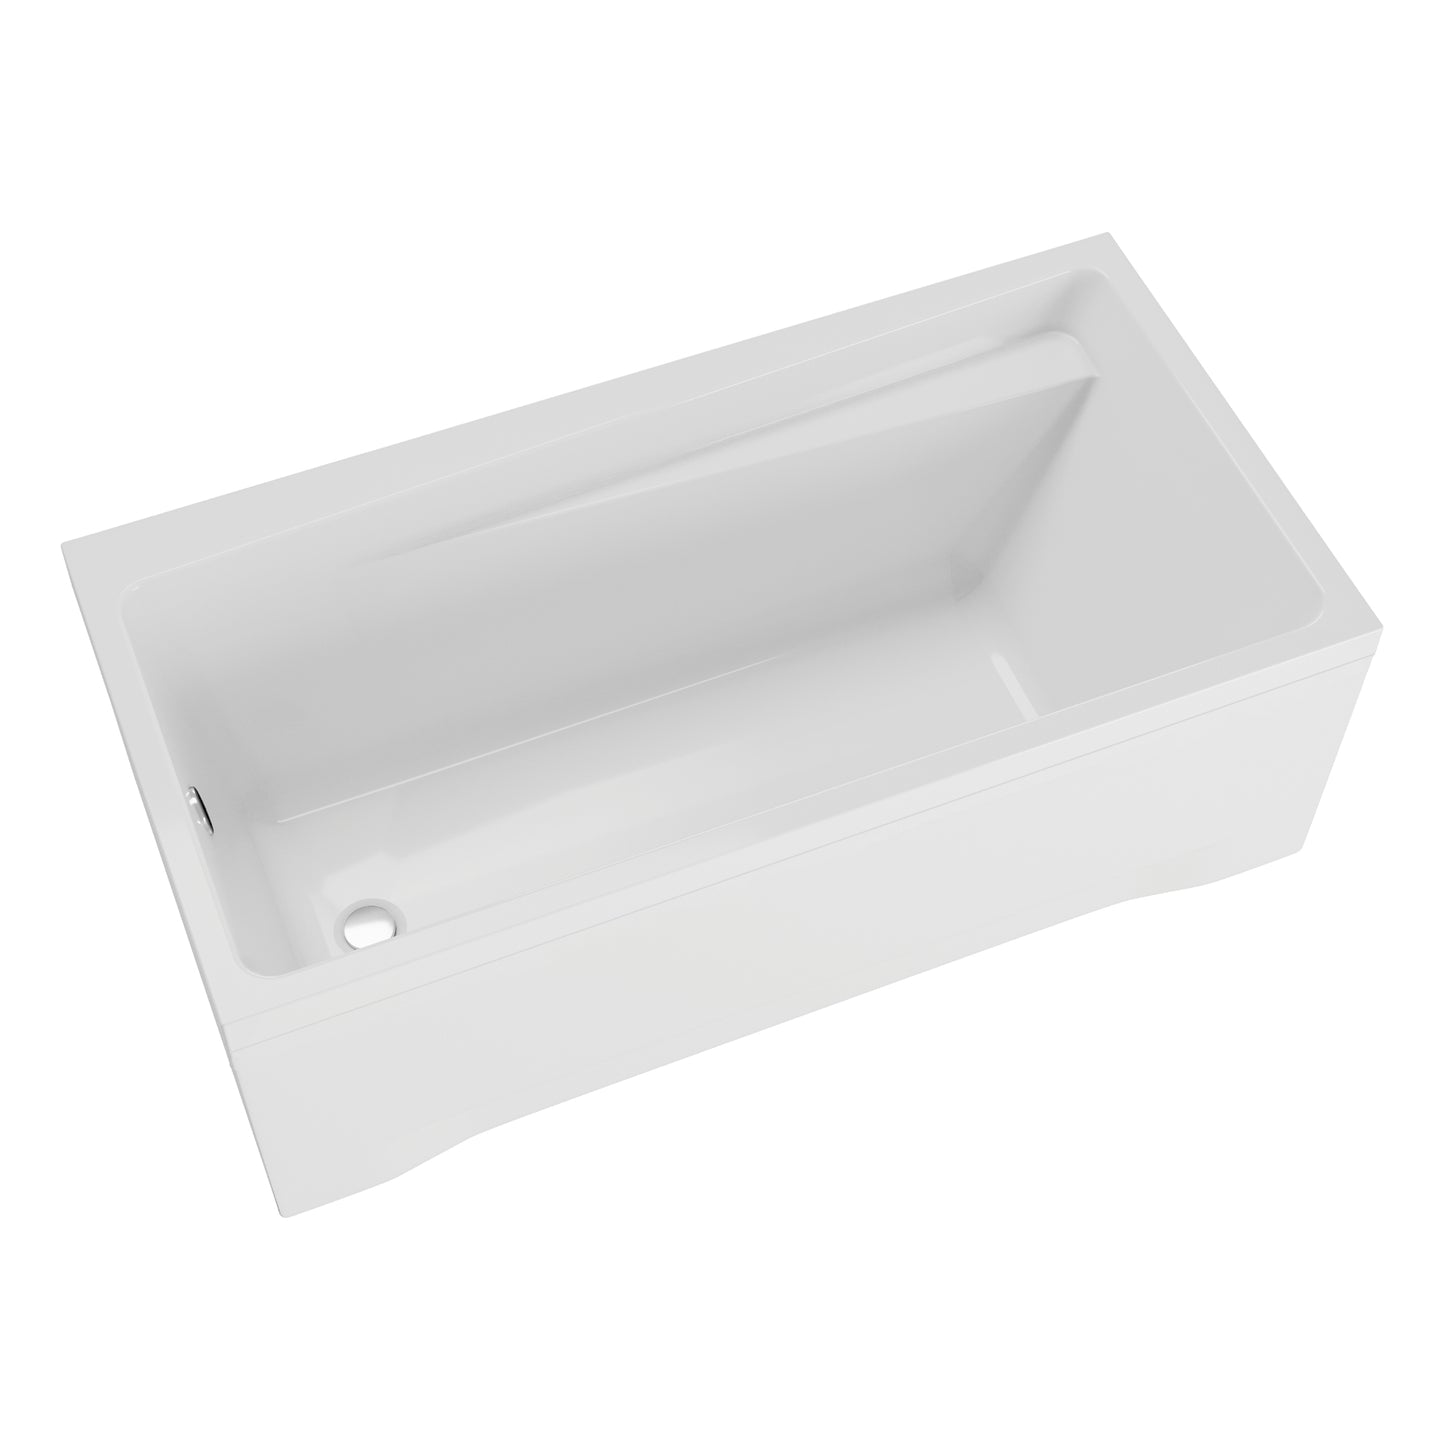 Acrylic rectangular bathtub ELZA